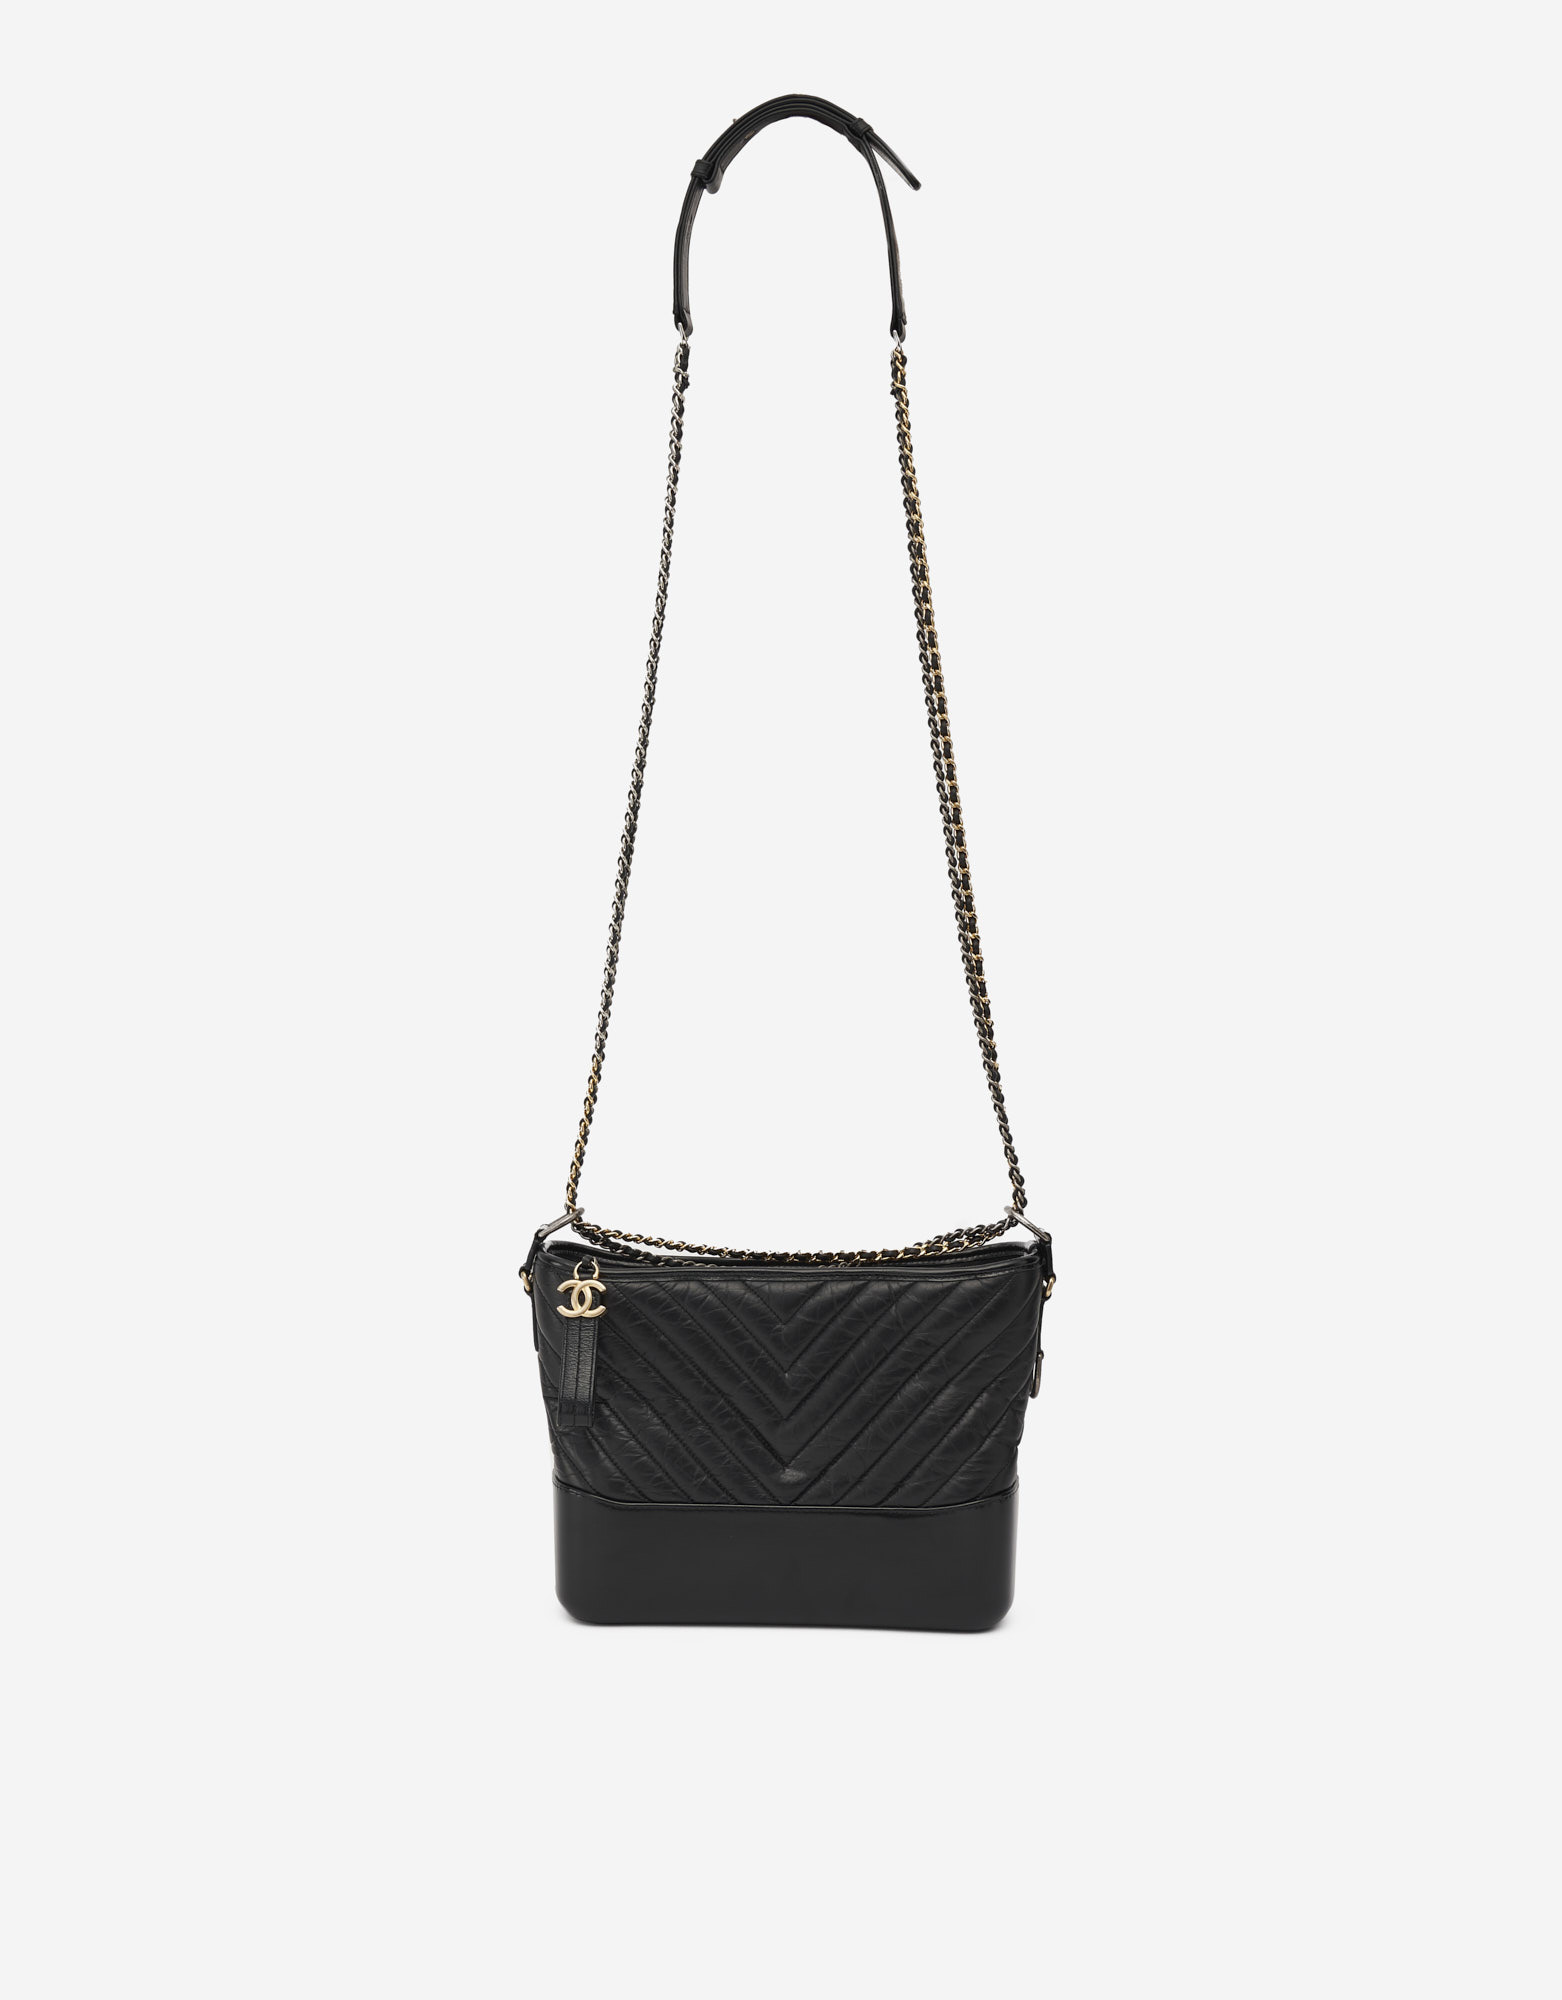 coco chanel black and white purse handbag